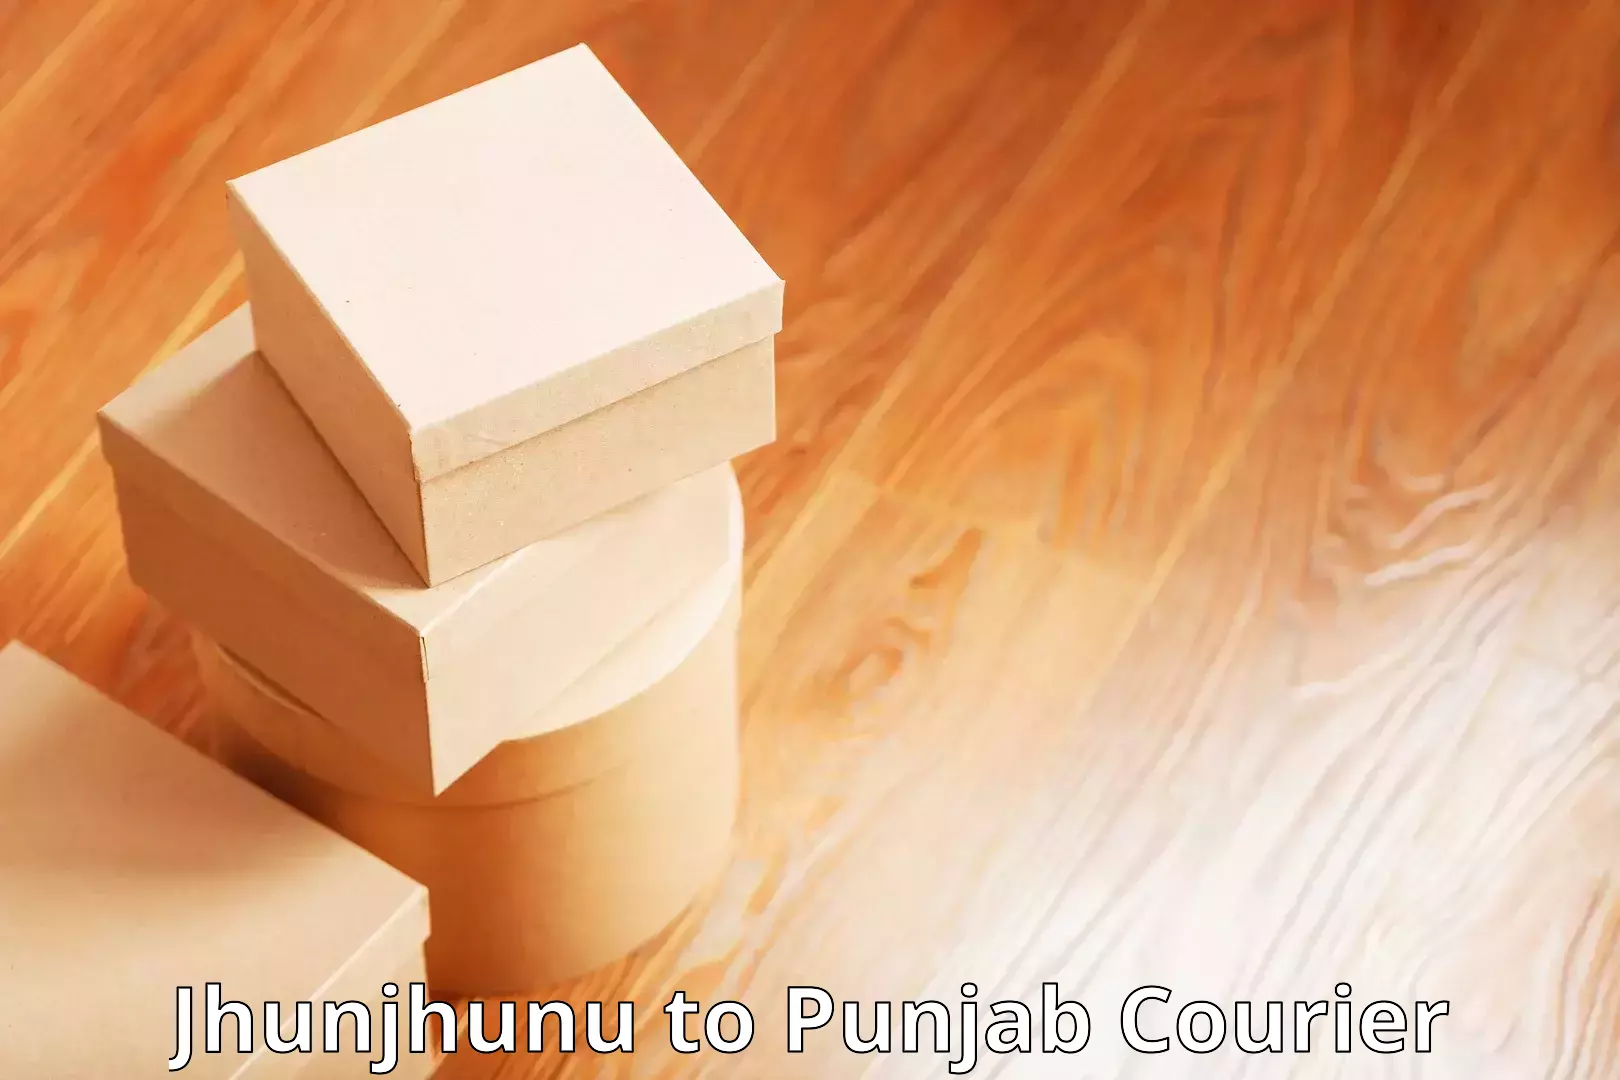 Sustainable courier practices Jhunjhunu to Amritsar